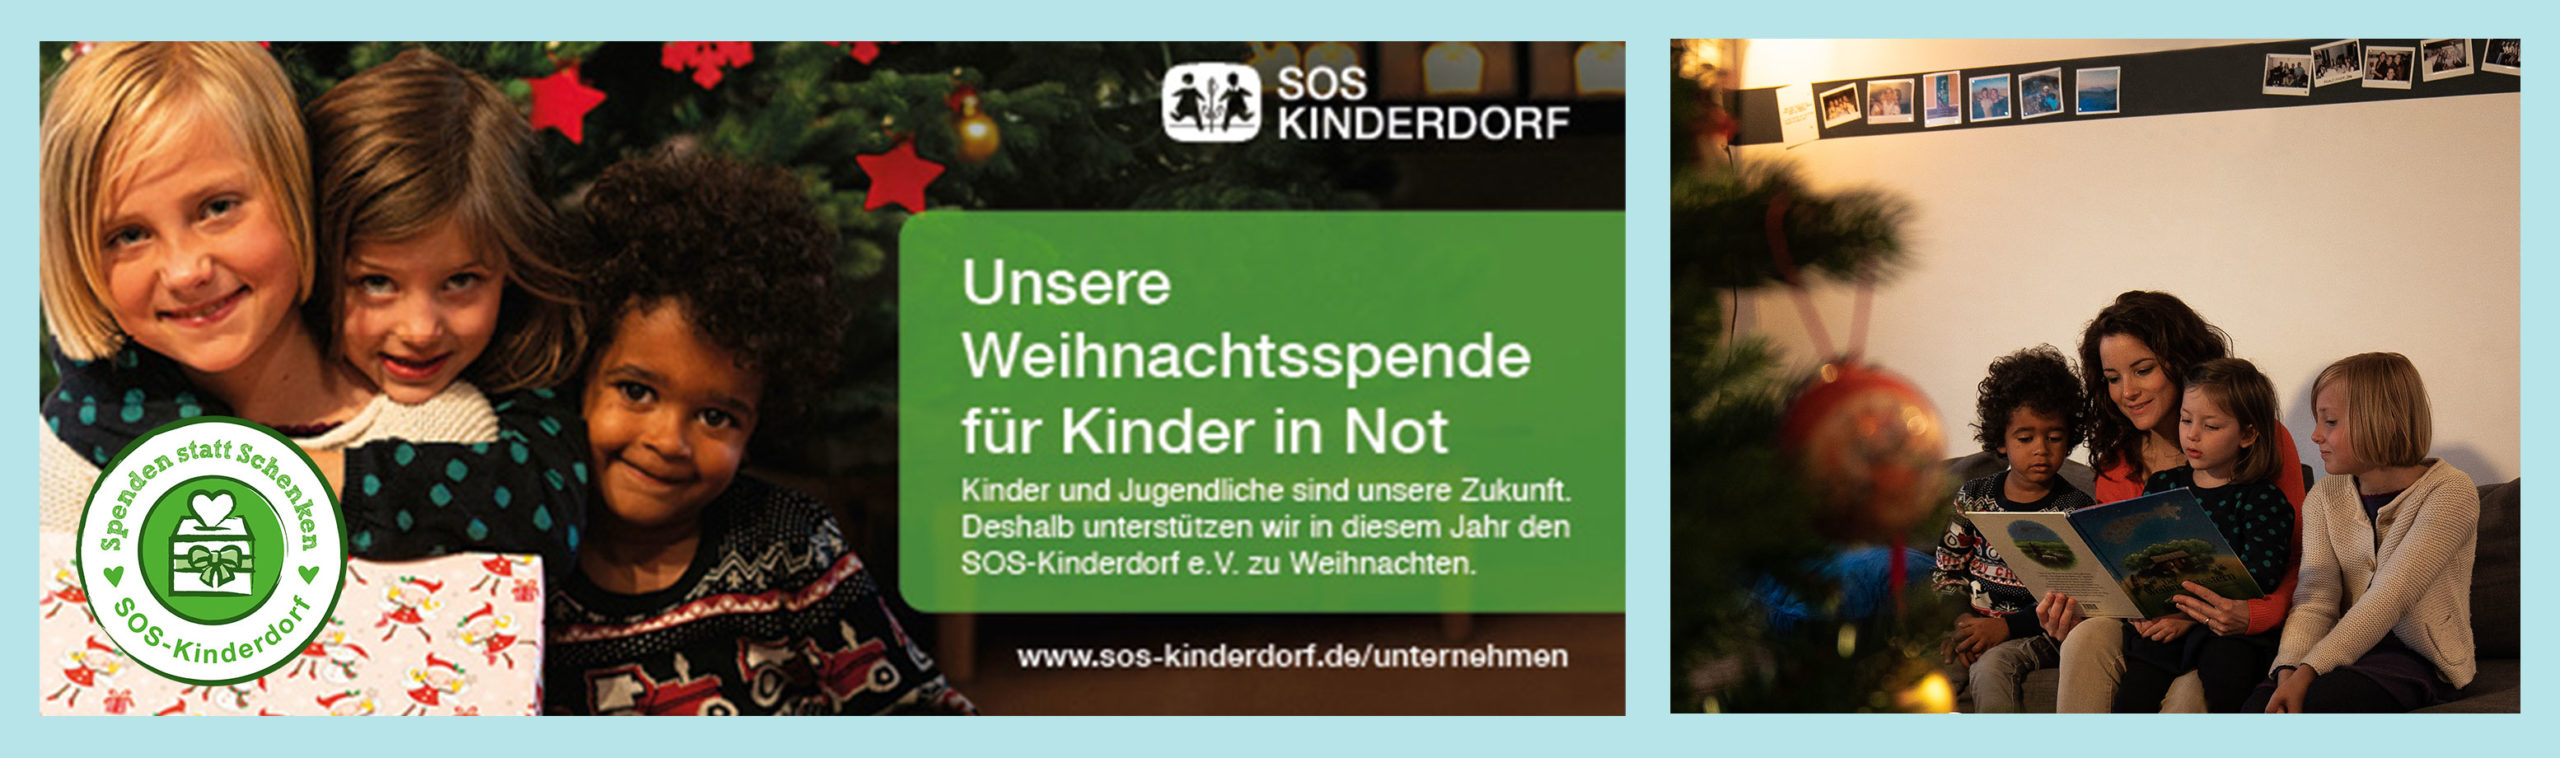 Spende an SOS-Kinderdorf